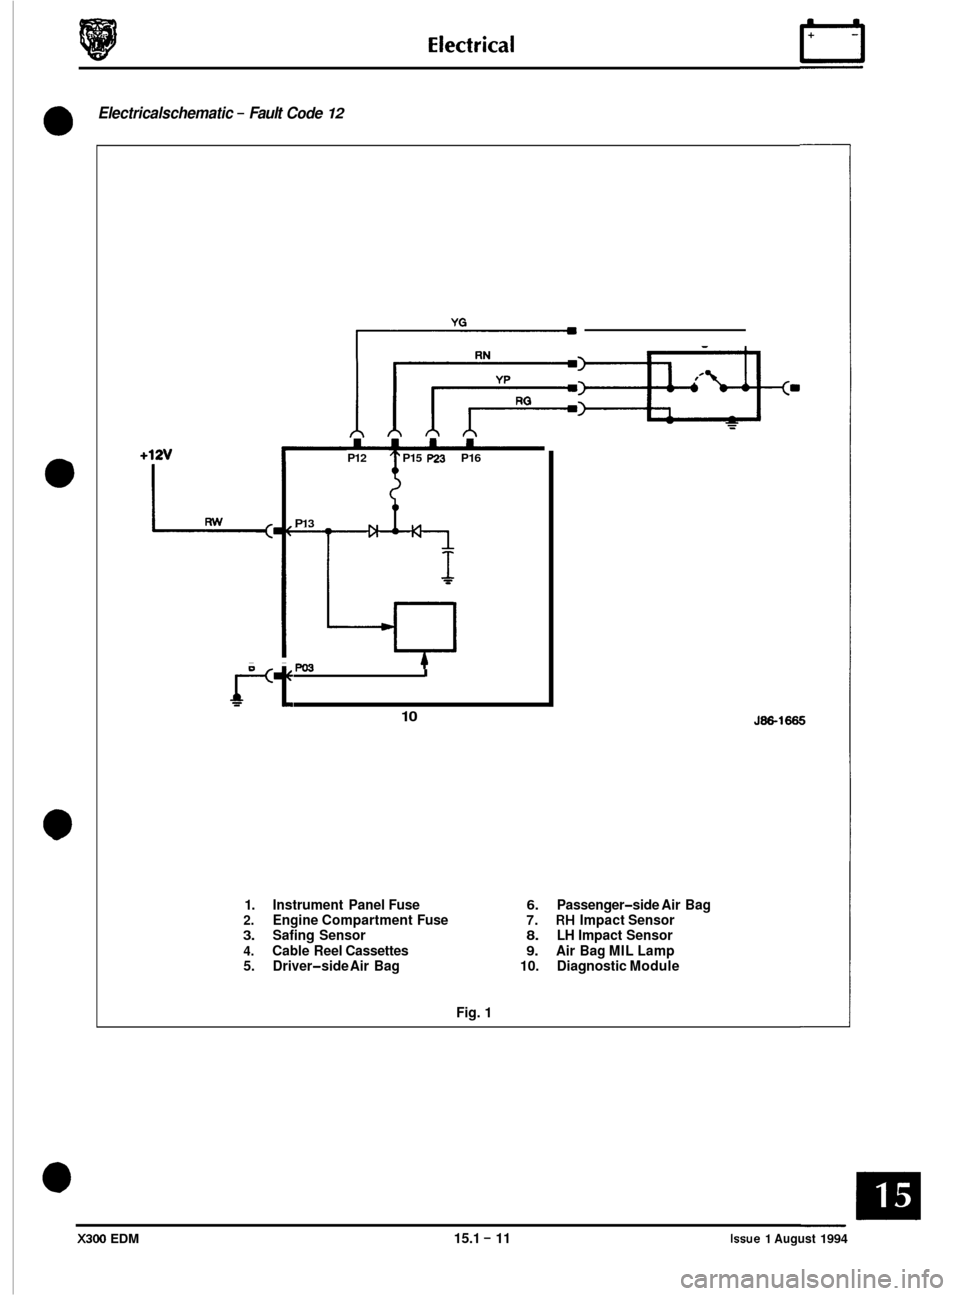 JAGUAR XJ6 1994 2.G Electrical Diagnostic Manual Electricalschematic - Fault Code 12 
0 
a 
e 
+12v 
1 p=-+- 
rn 4 rn 
- 
P15 !J23 P16 
P12 
P13 
PO3 I 
10 
1.  Instrument  Panel  Fuse 6. Passenger-side Air  Bag 2. Engine  Compartment  Fuse 7. RH Im